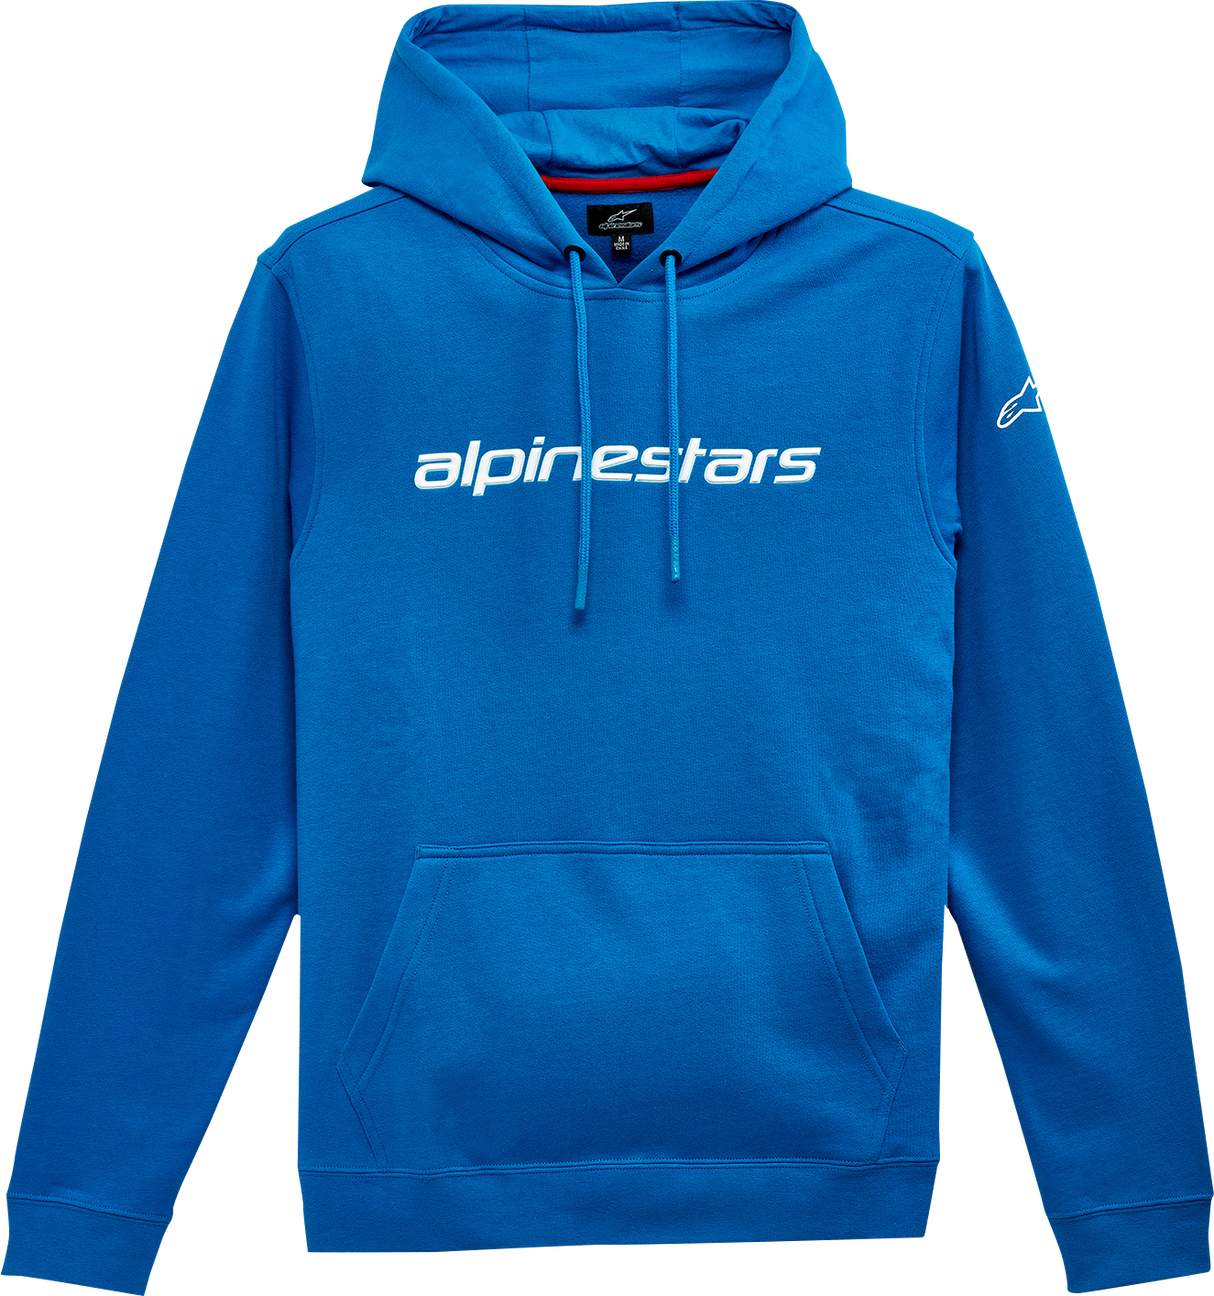 ALPINESTARS Linear Hoodie - Blue/White - Medium 1213516707223M